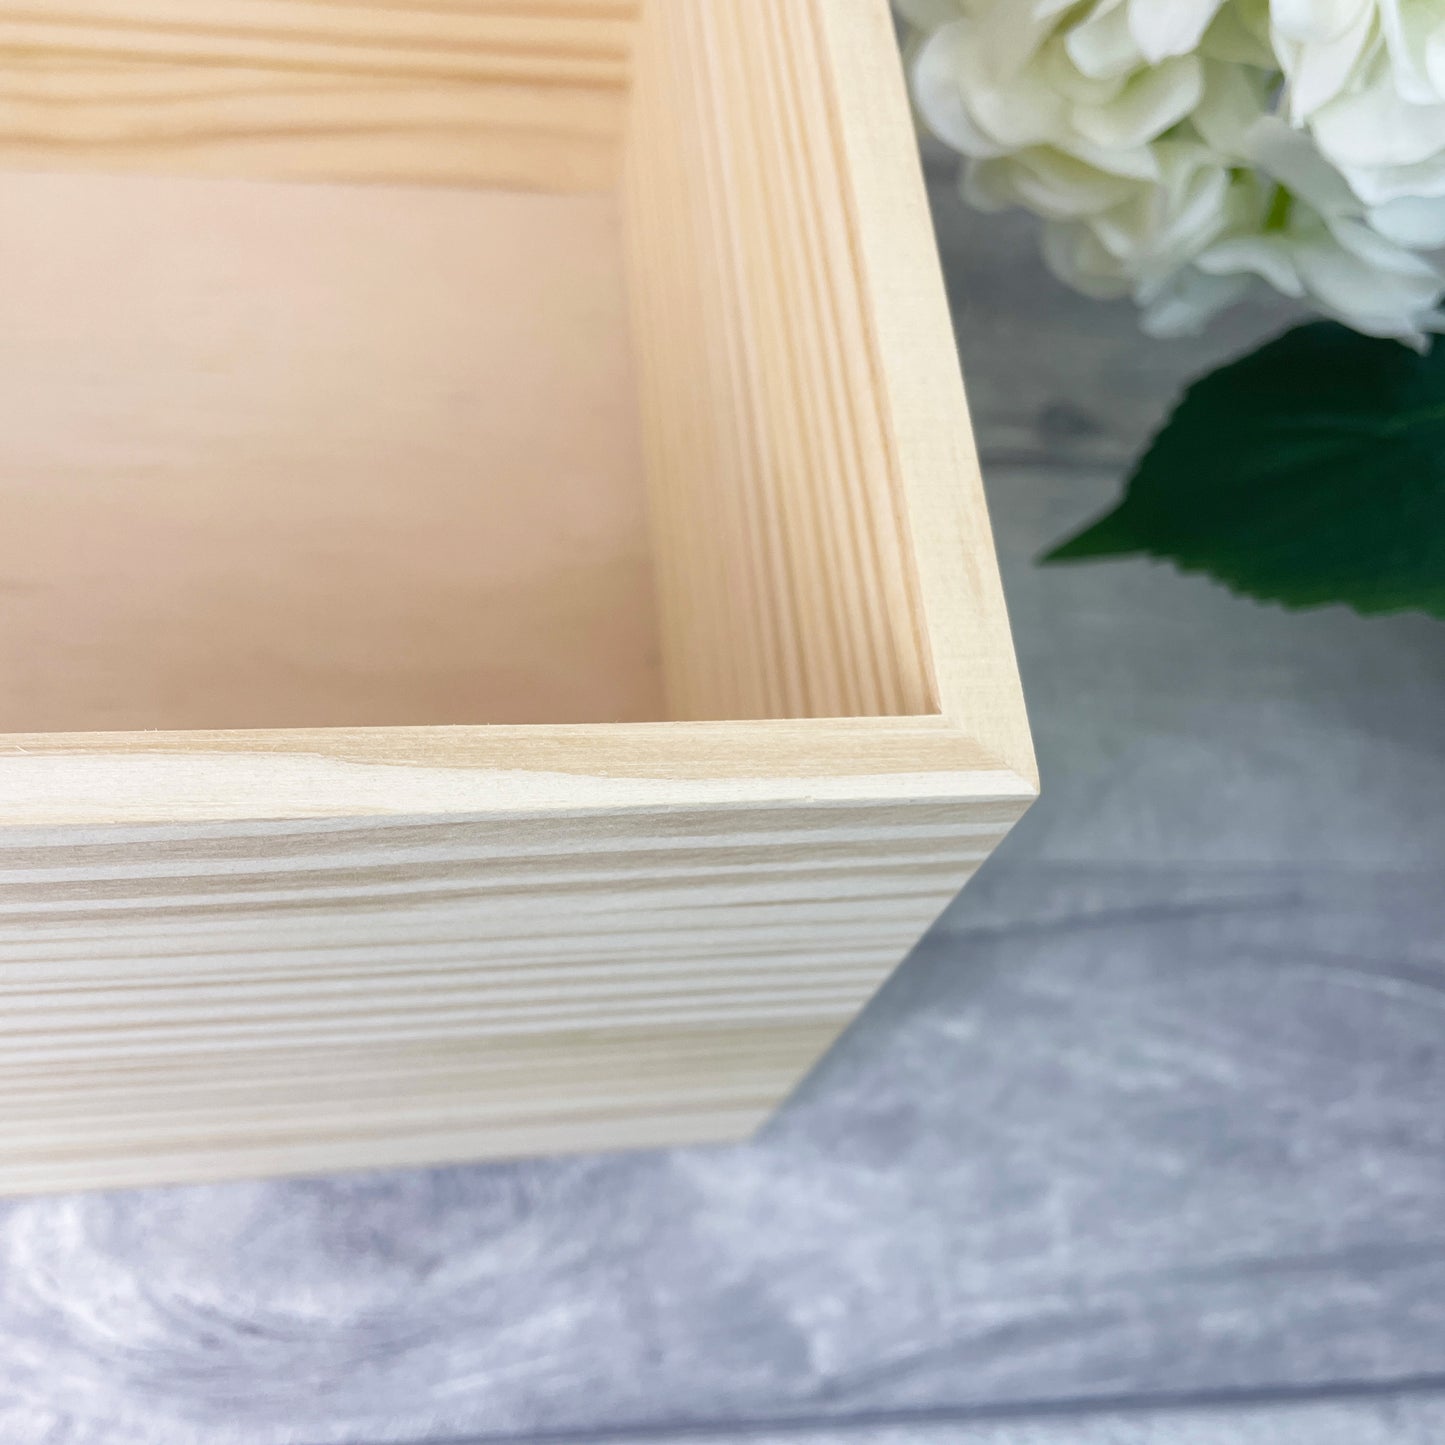 Personalised Wooden Botanical Wedding Keepsake Memory Box - 5 Sizes (16cm | 20cm | 26cm | 30cm | 36cm)